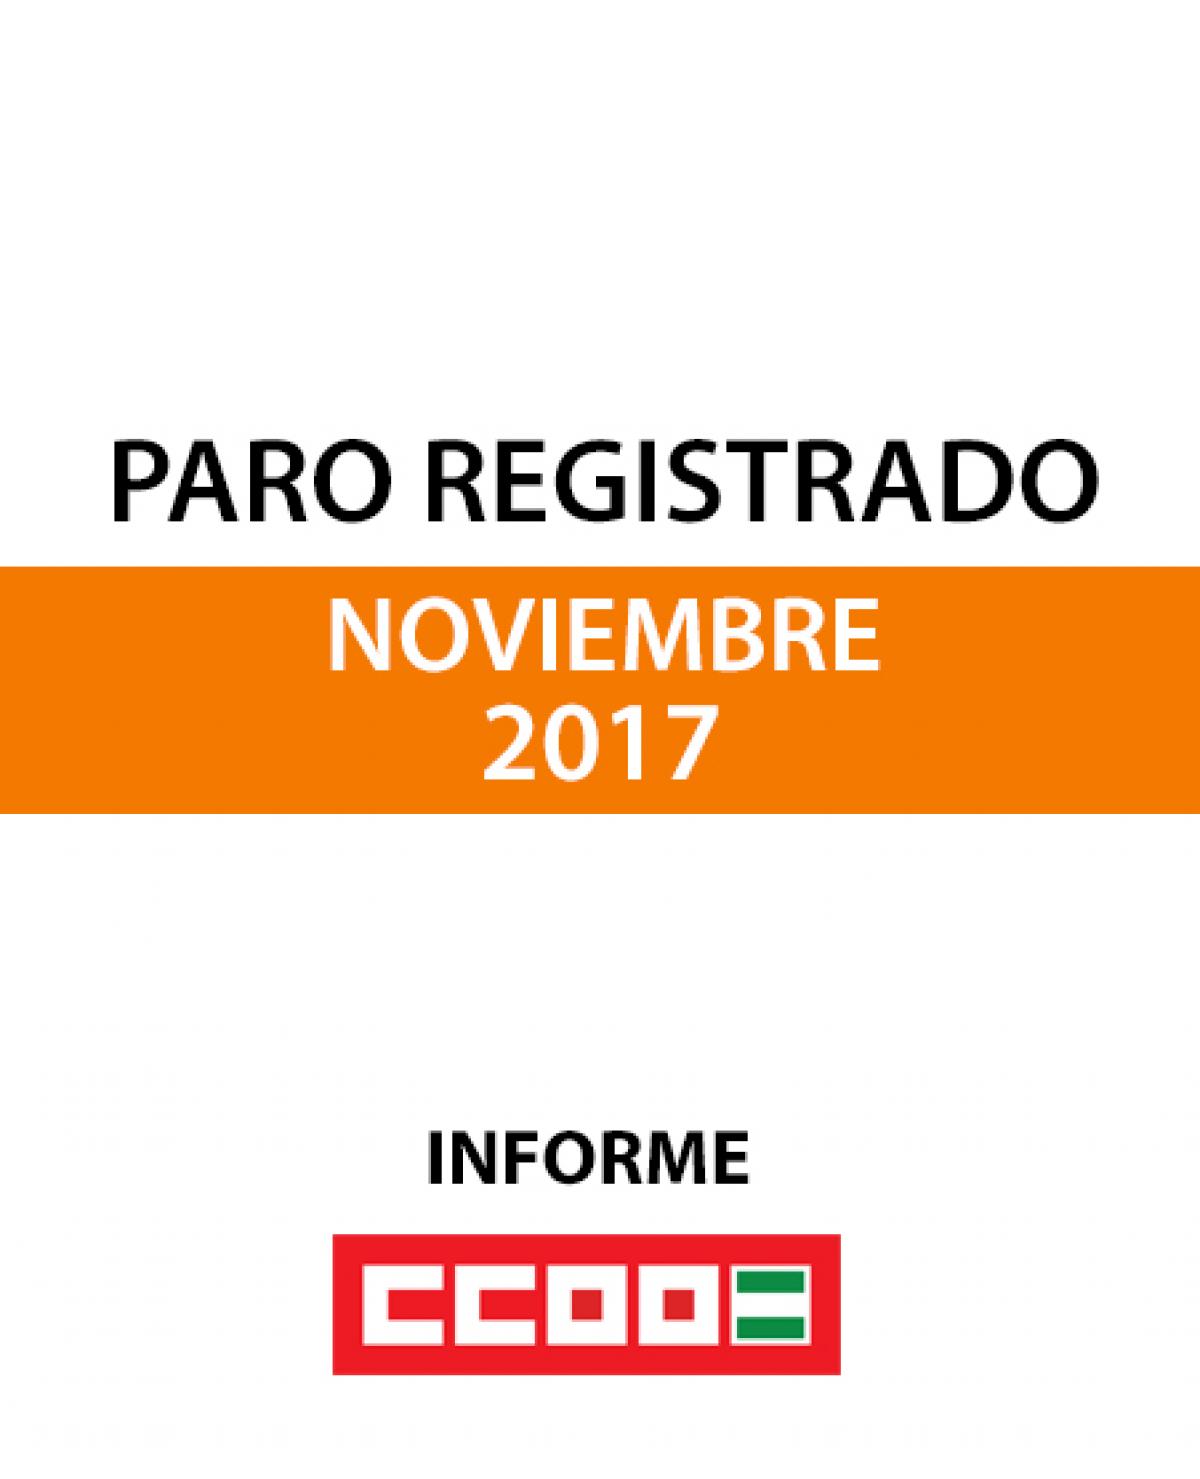 Paro registrado noviembre 2017